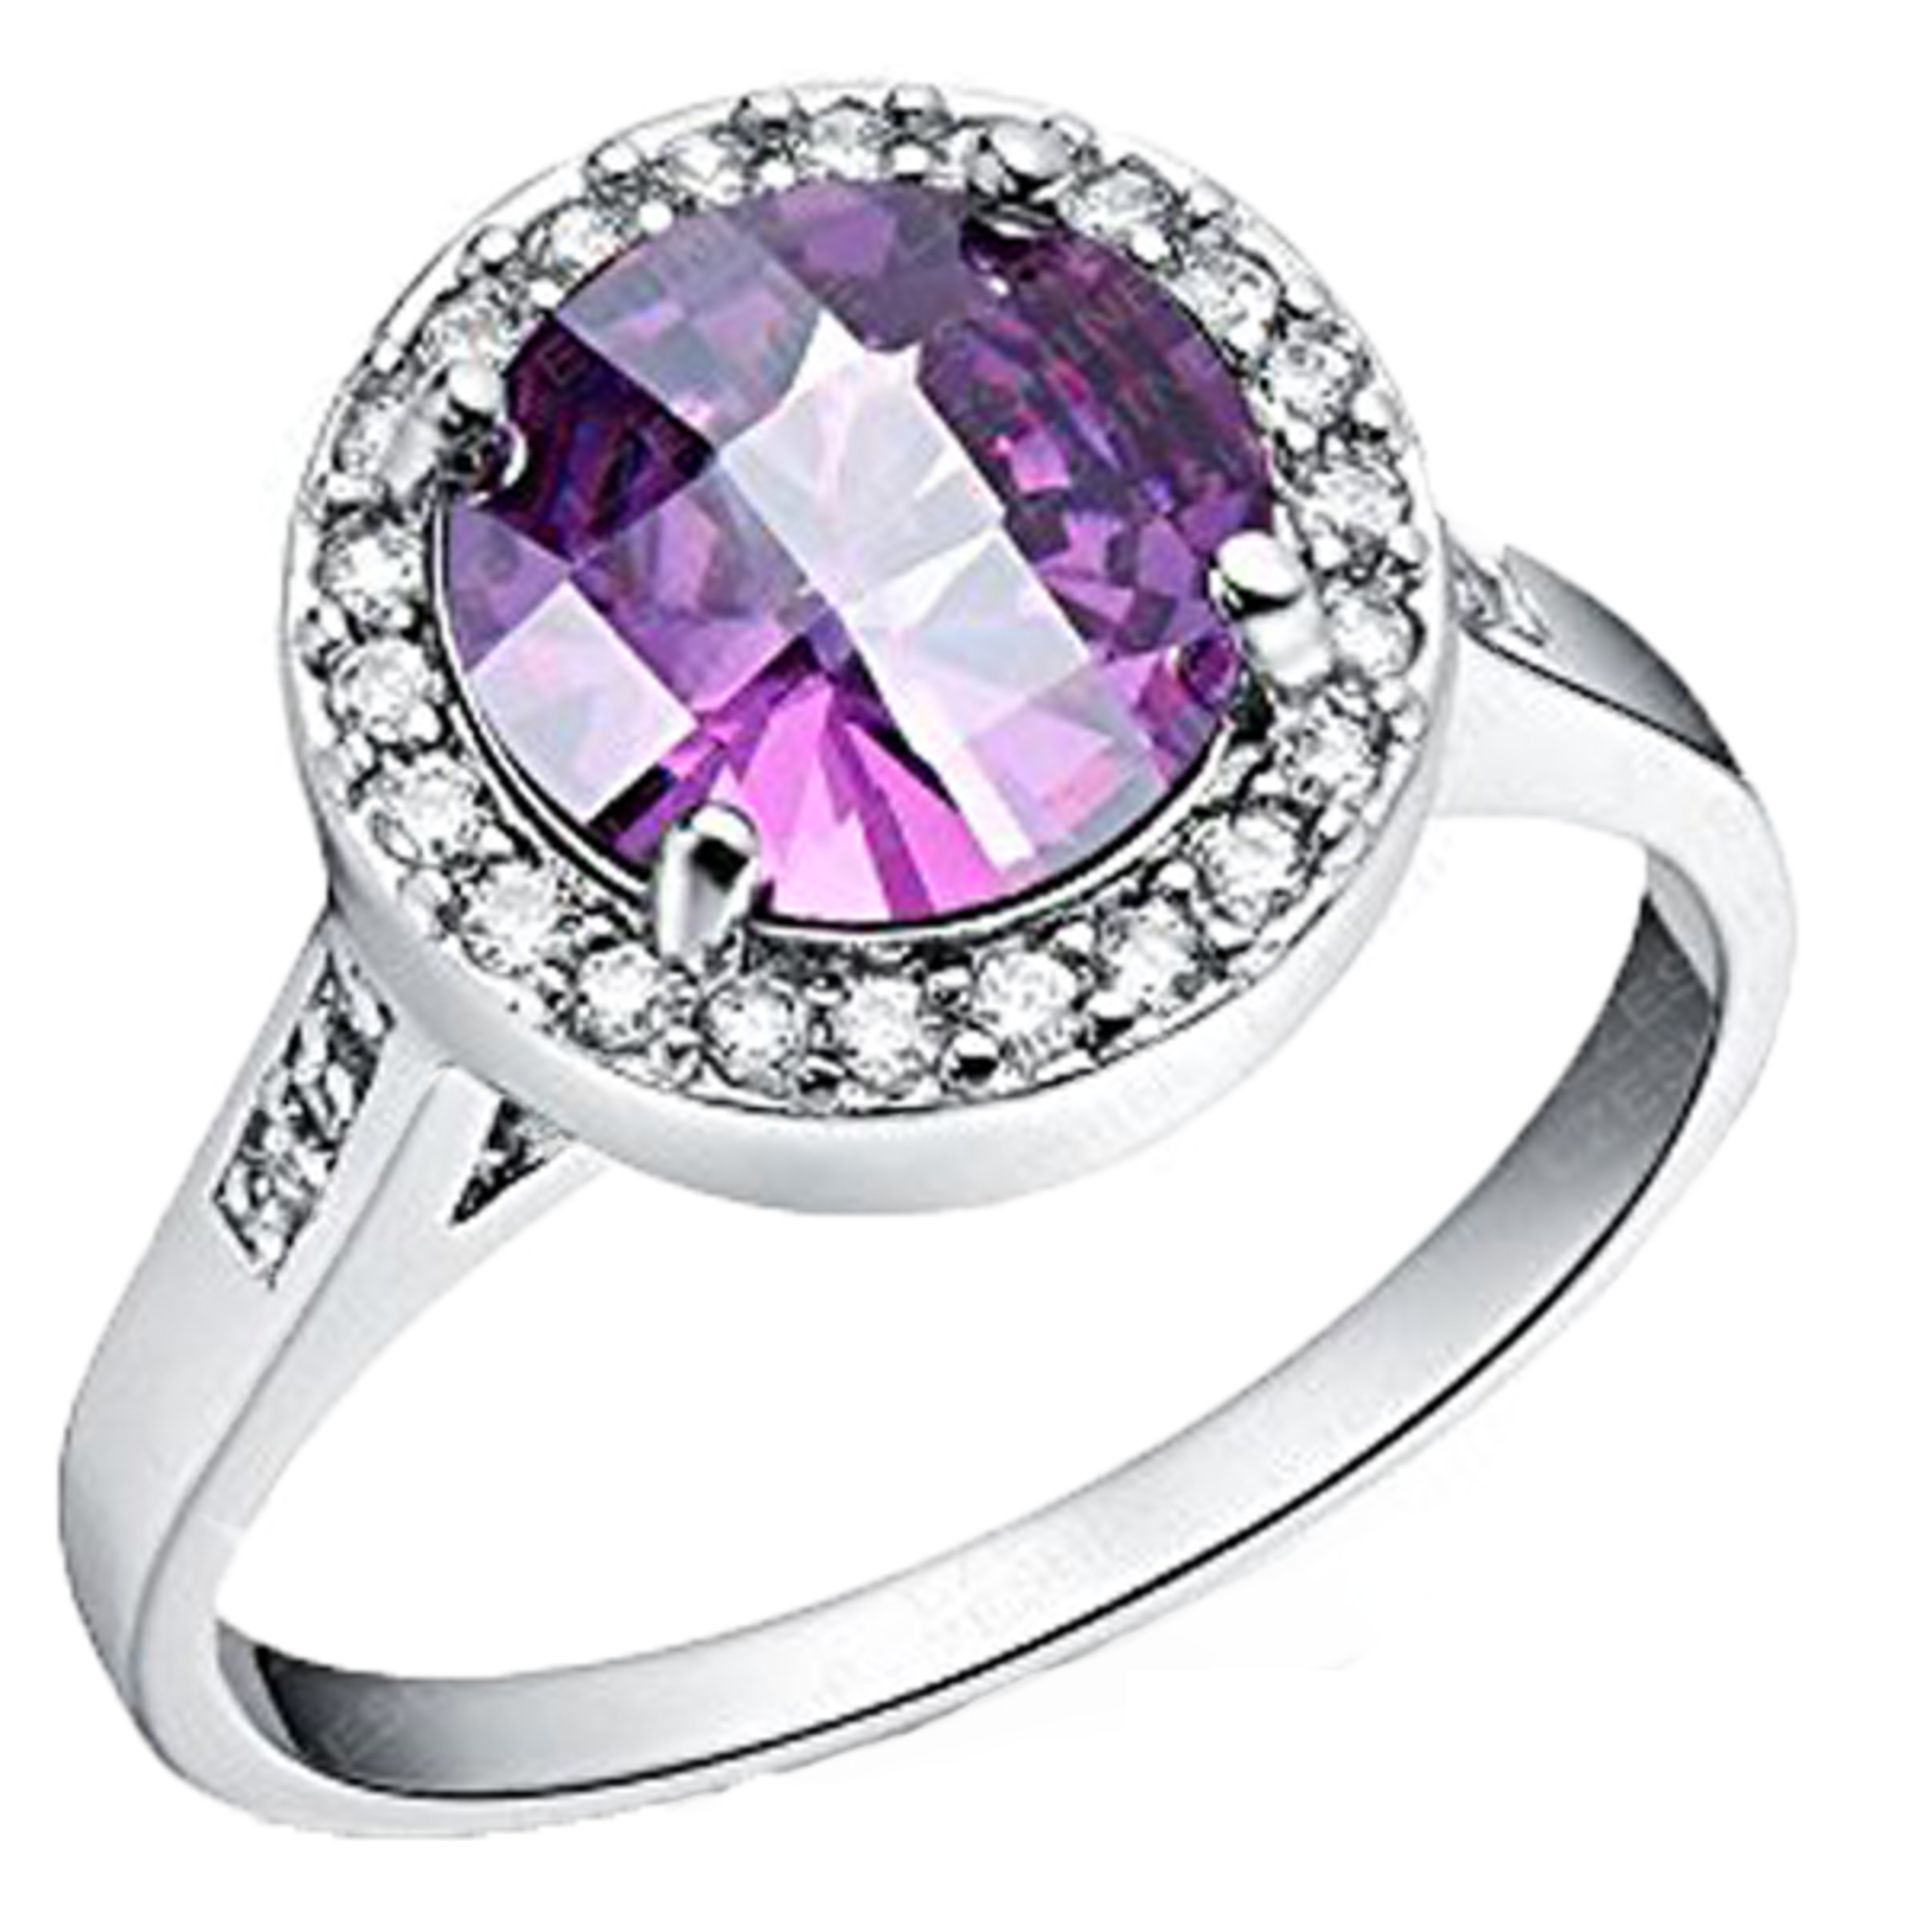 V Brand New Platinum Plated White and Purple Stone Ring